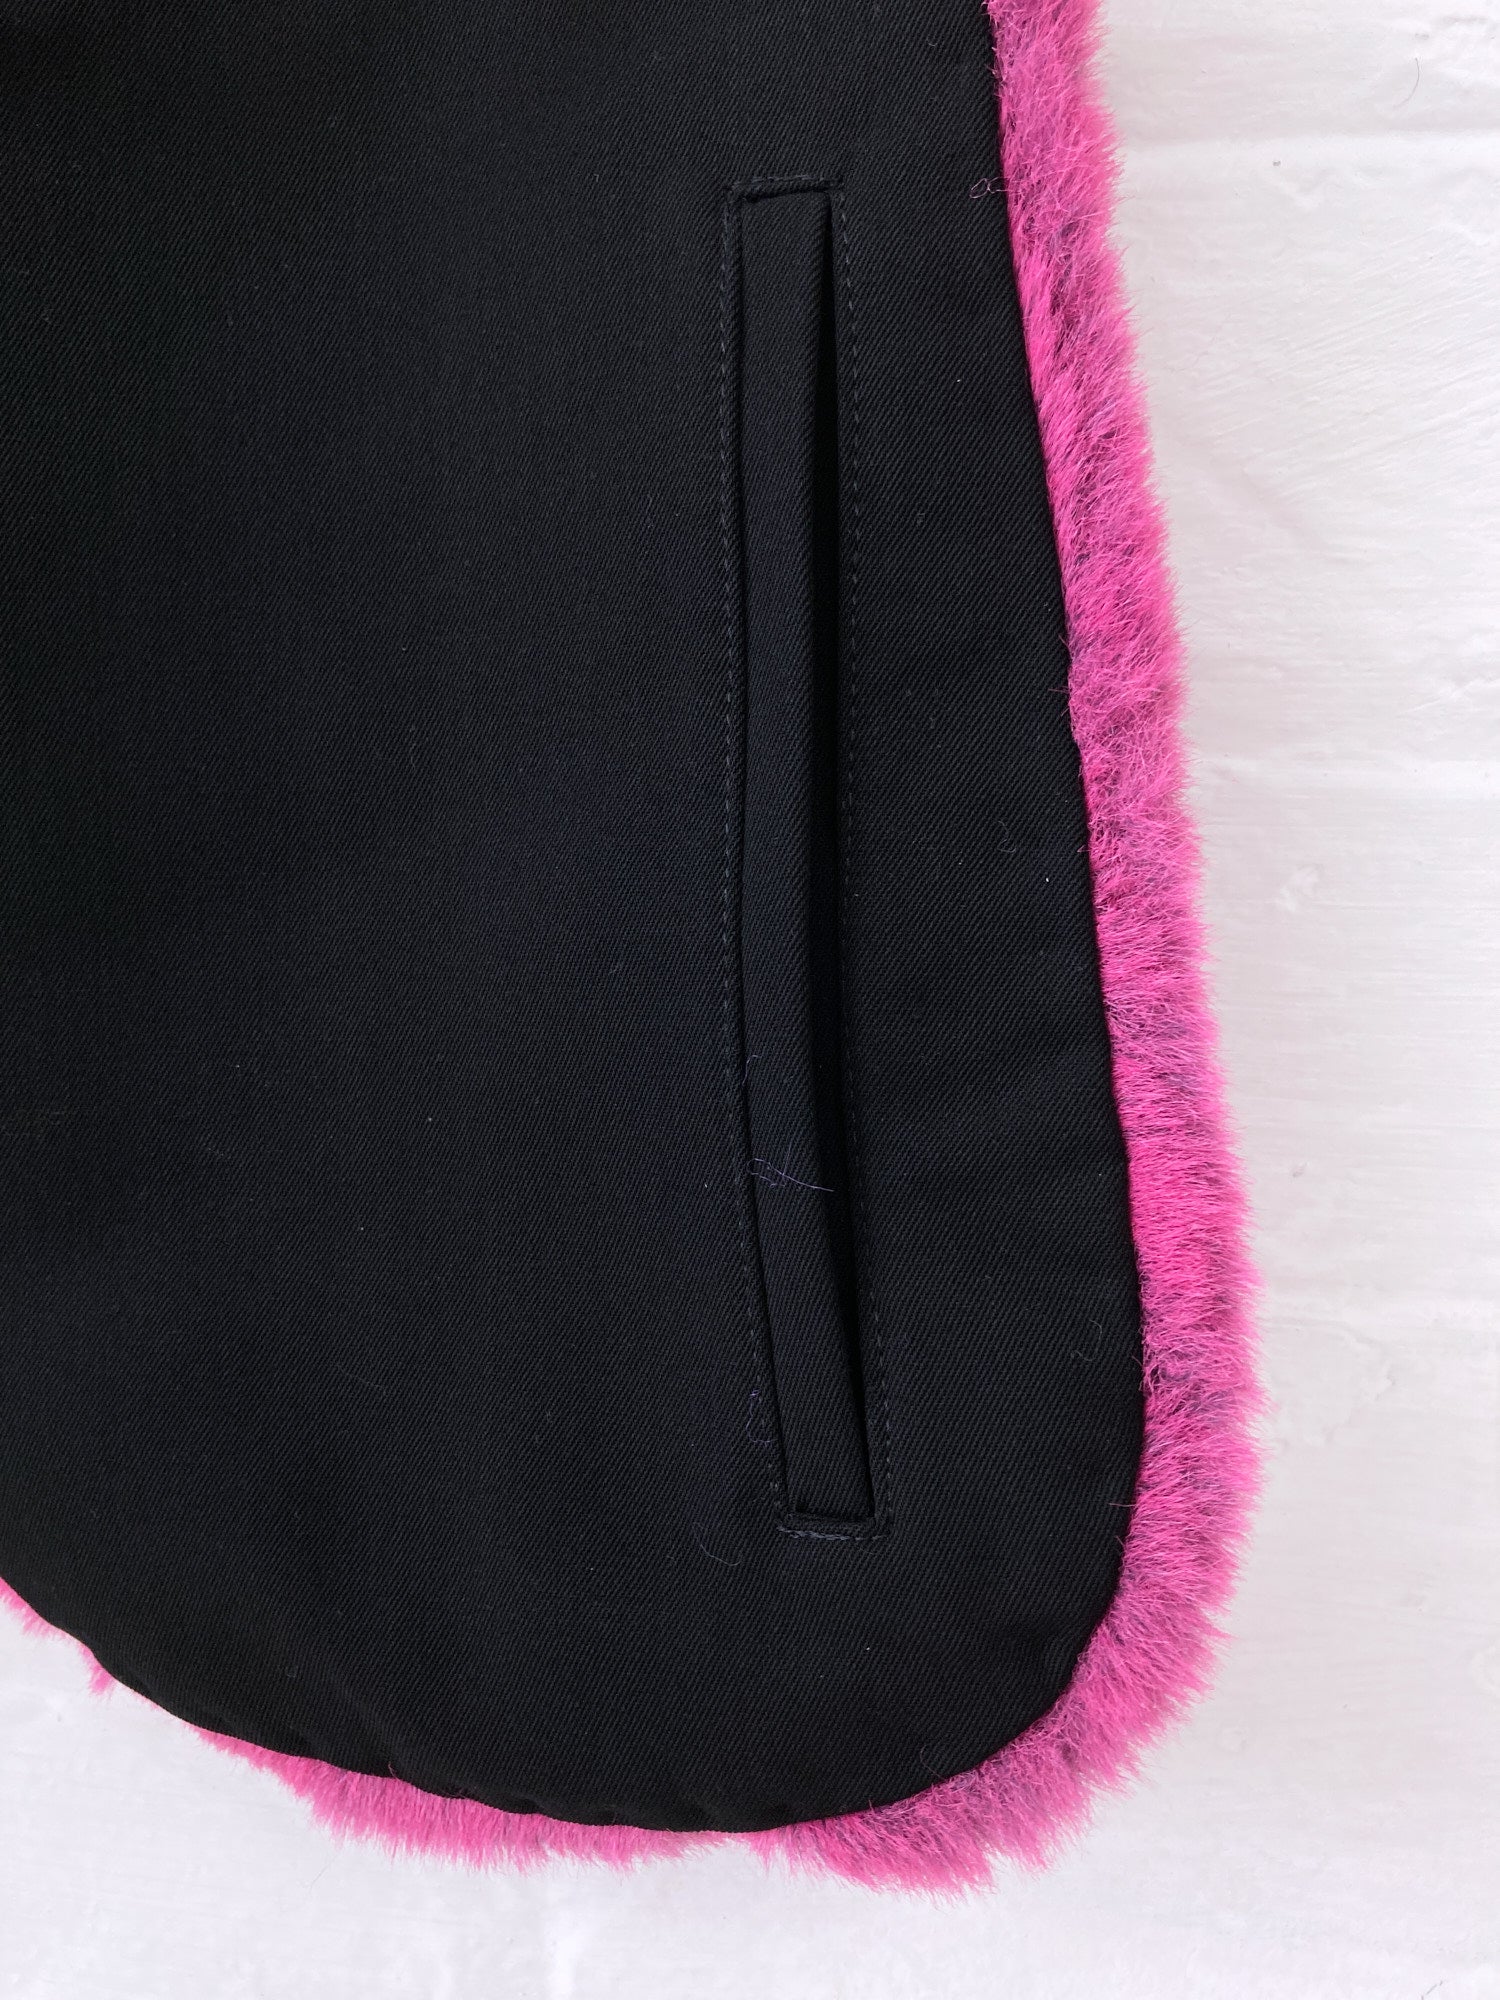 Limi feu bright pink acrylic faux fur vest